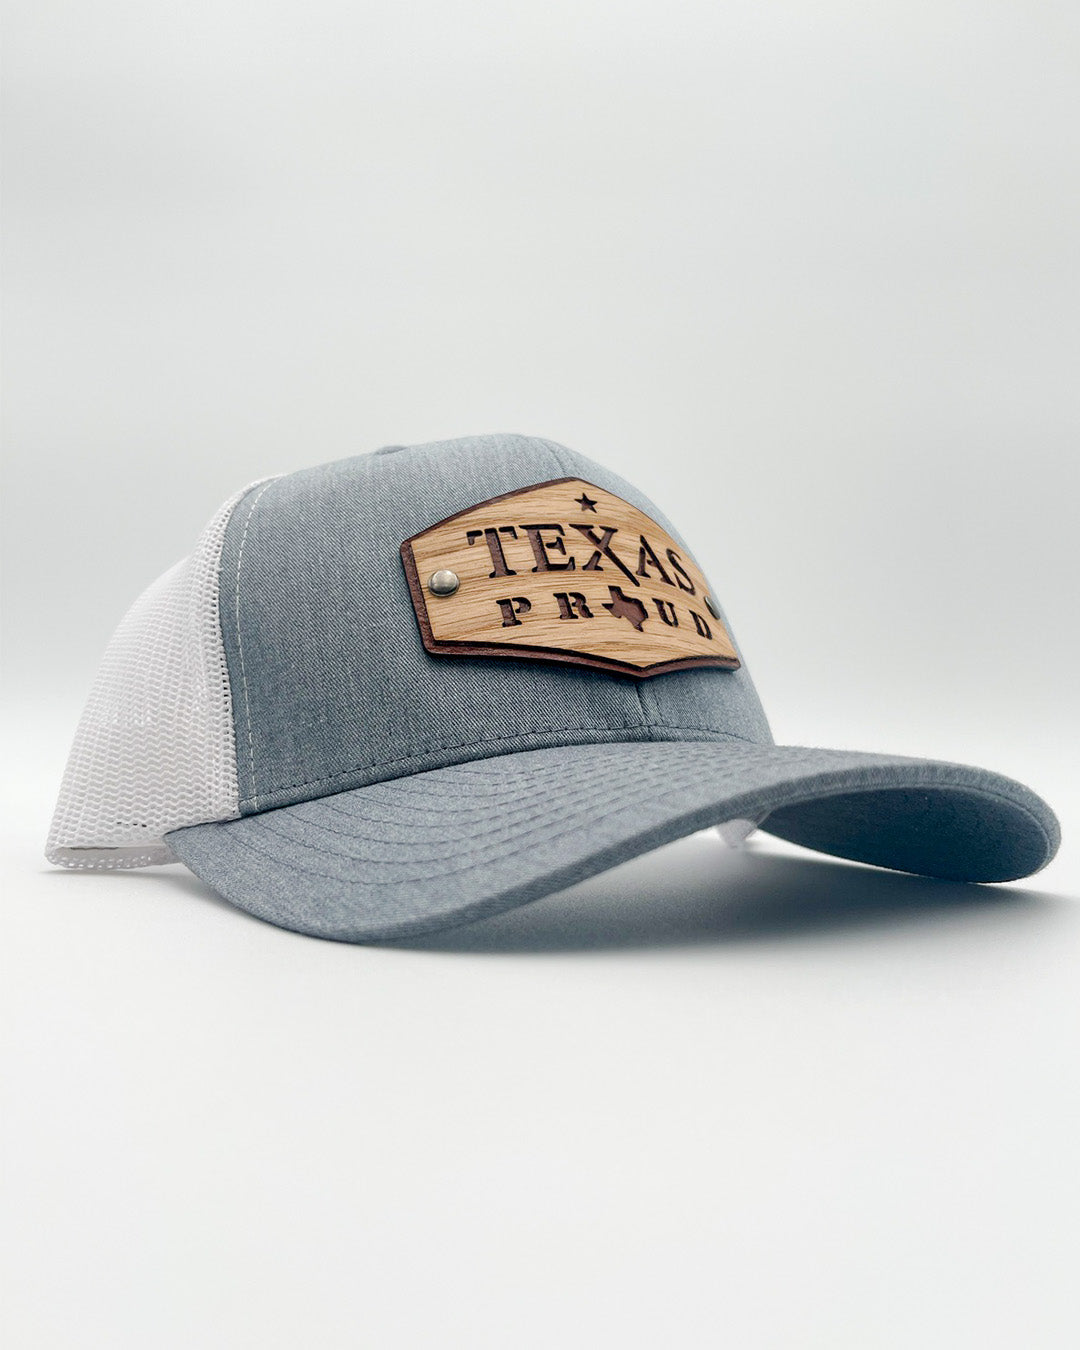 Cheap Custom Hats & Caps Richardson FlexFit Original Texas Proud Edition Real Wood & Leather Patch Hat Retro Trucker Mesh Cap